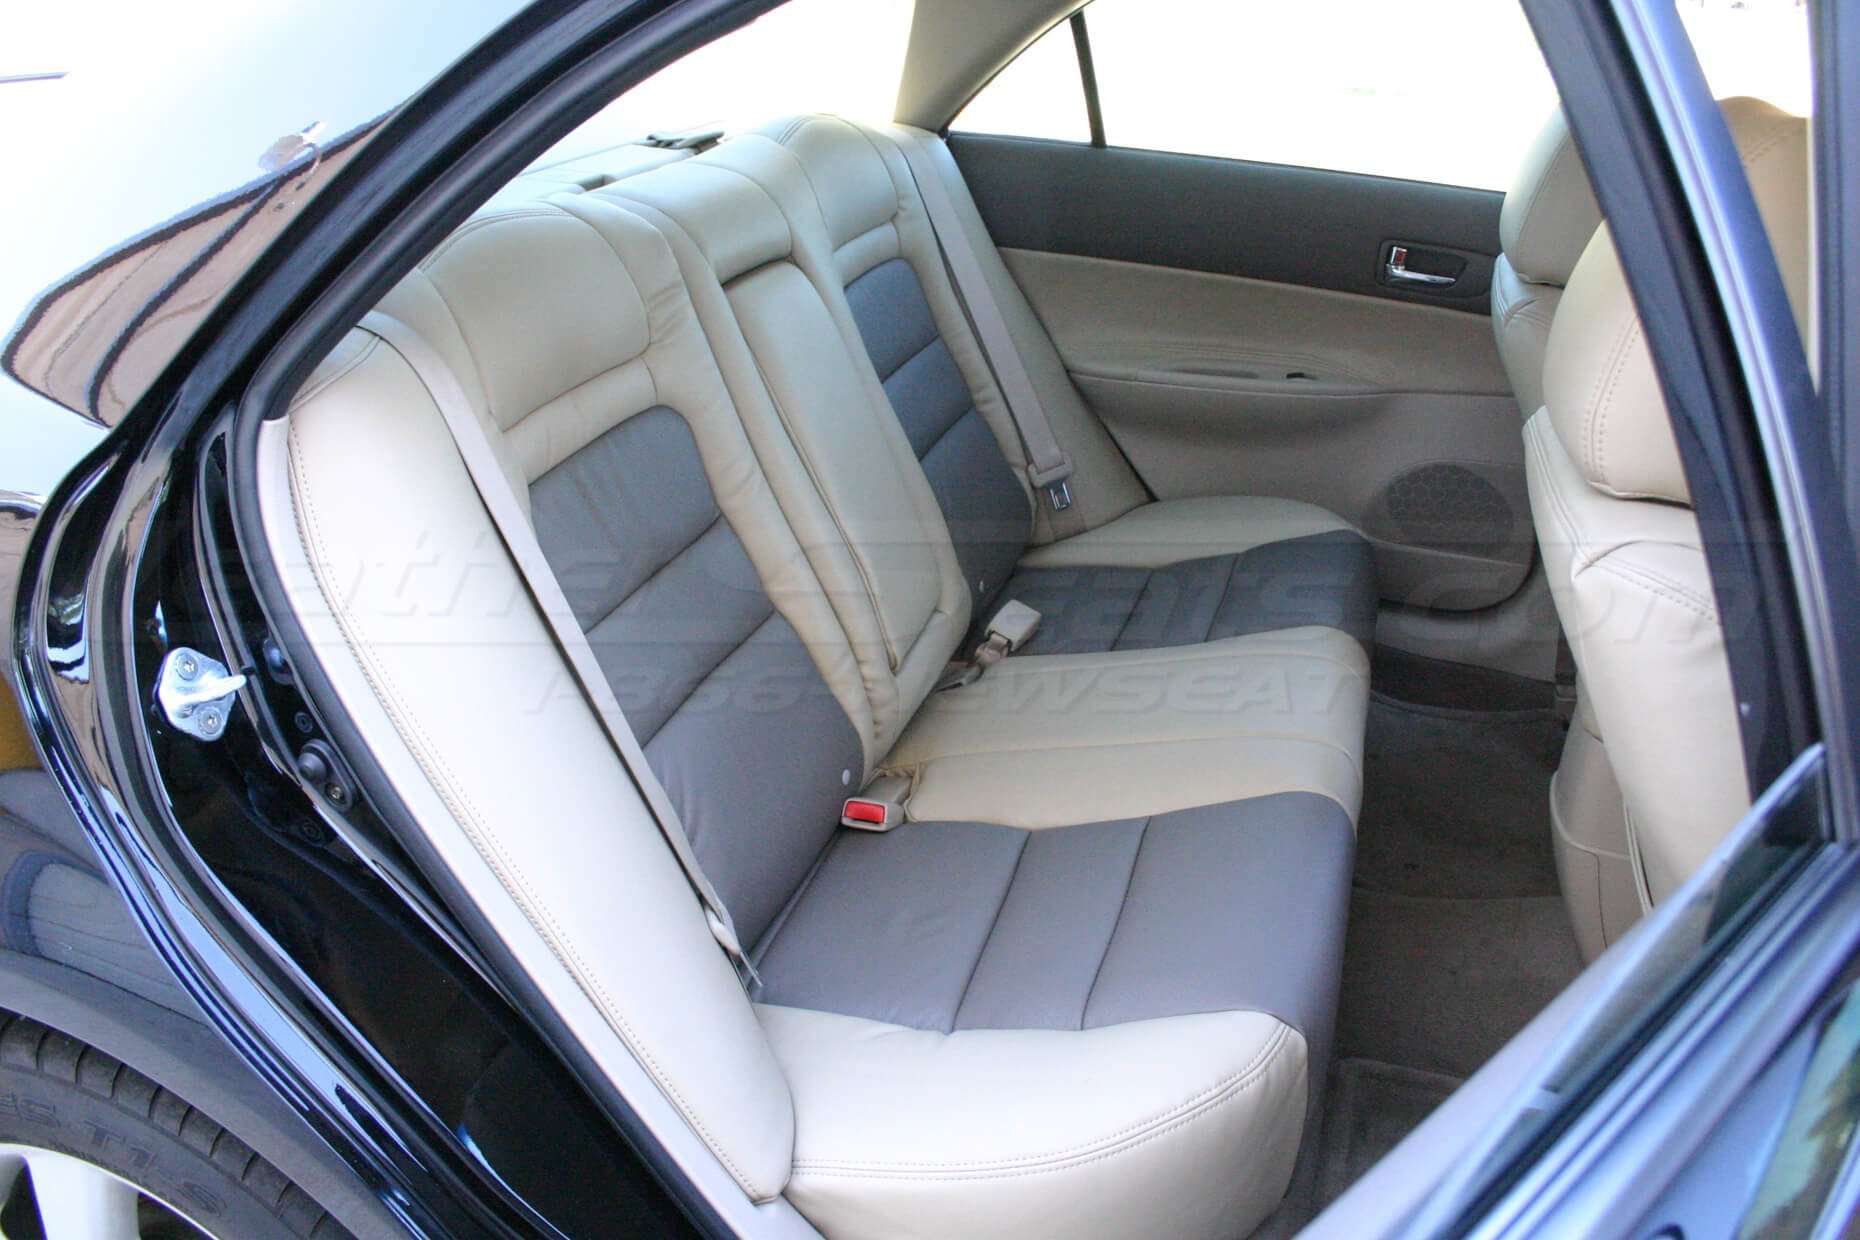 Mazda 6 Leather Seats - Rear interior